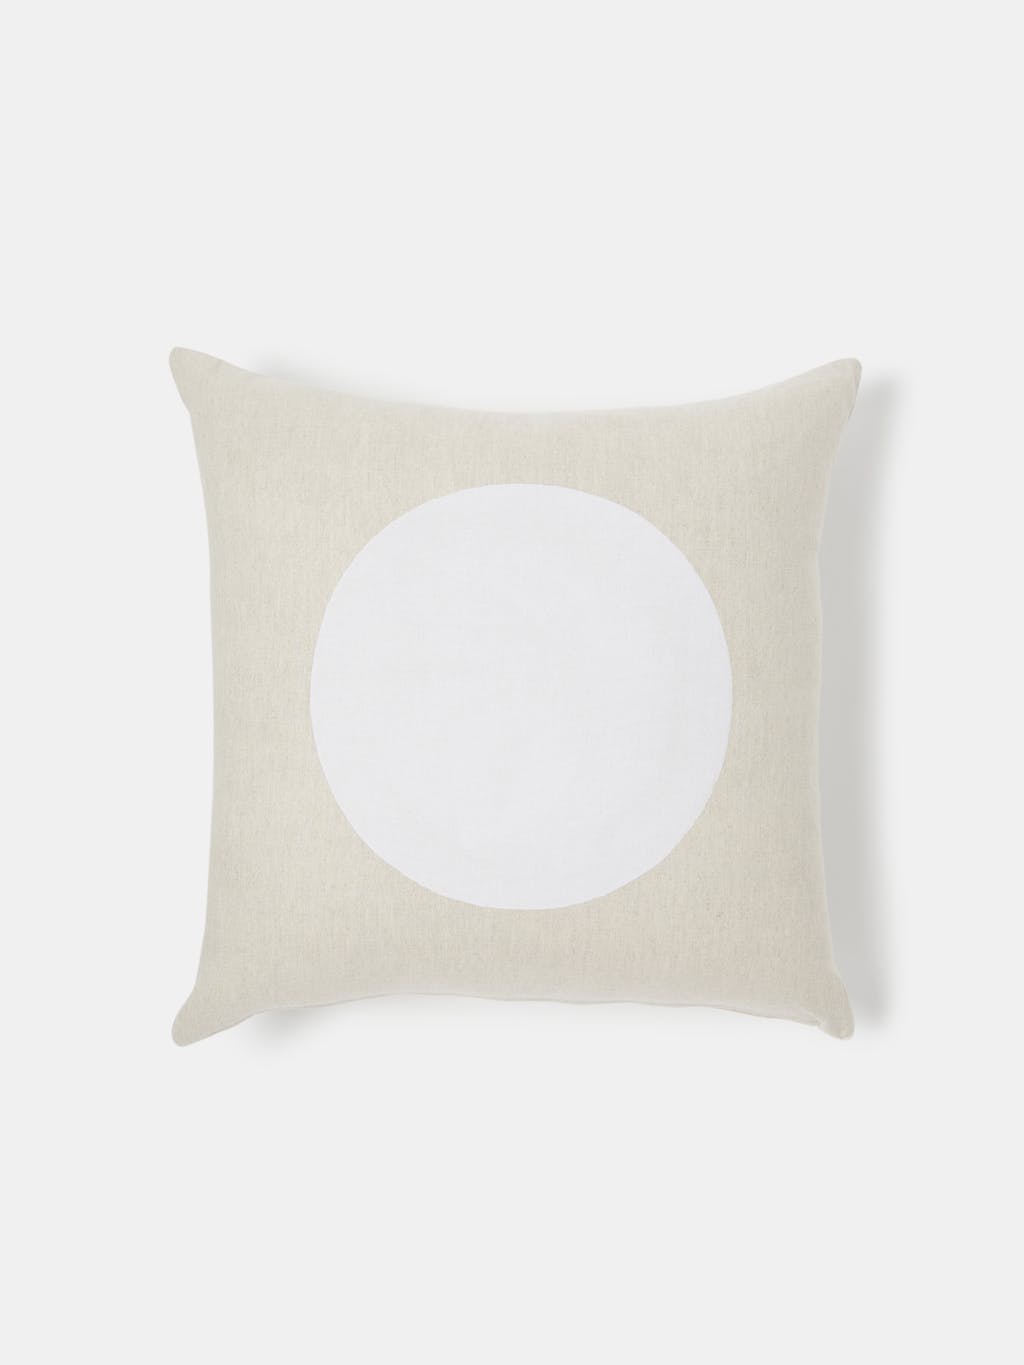 Sonny Block Print Pillow